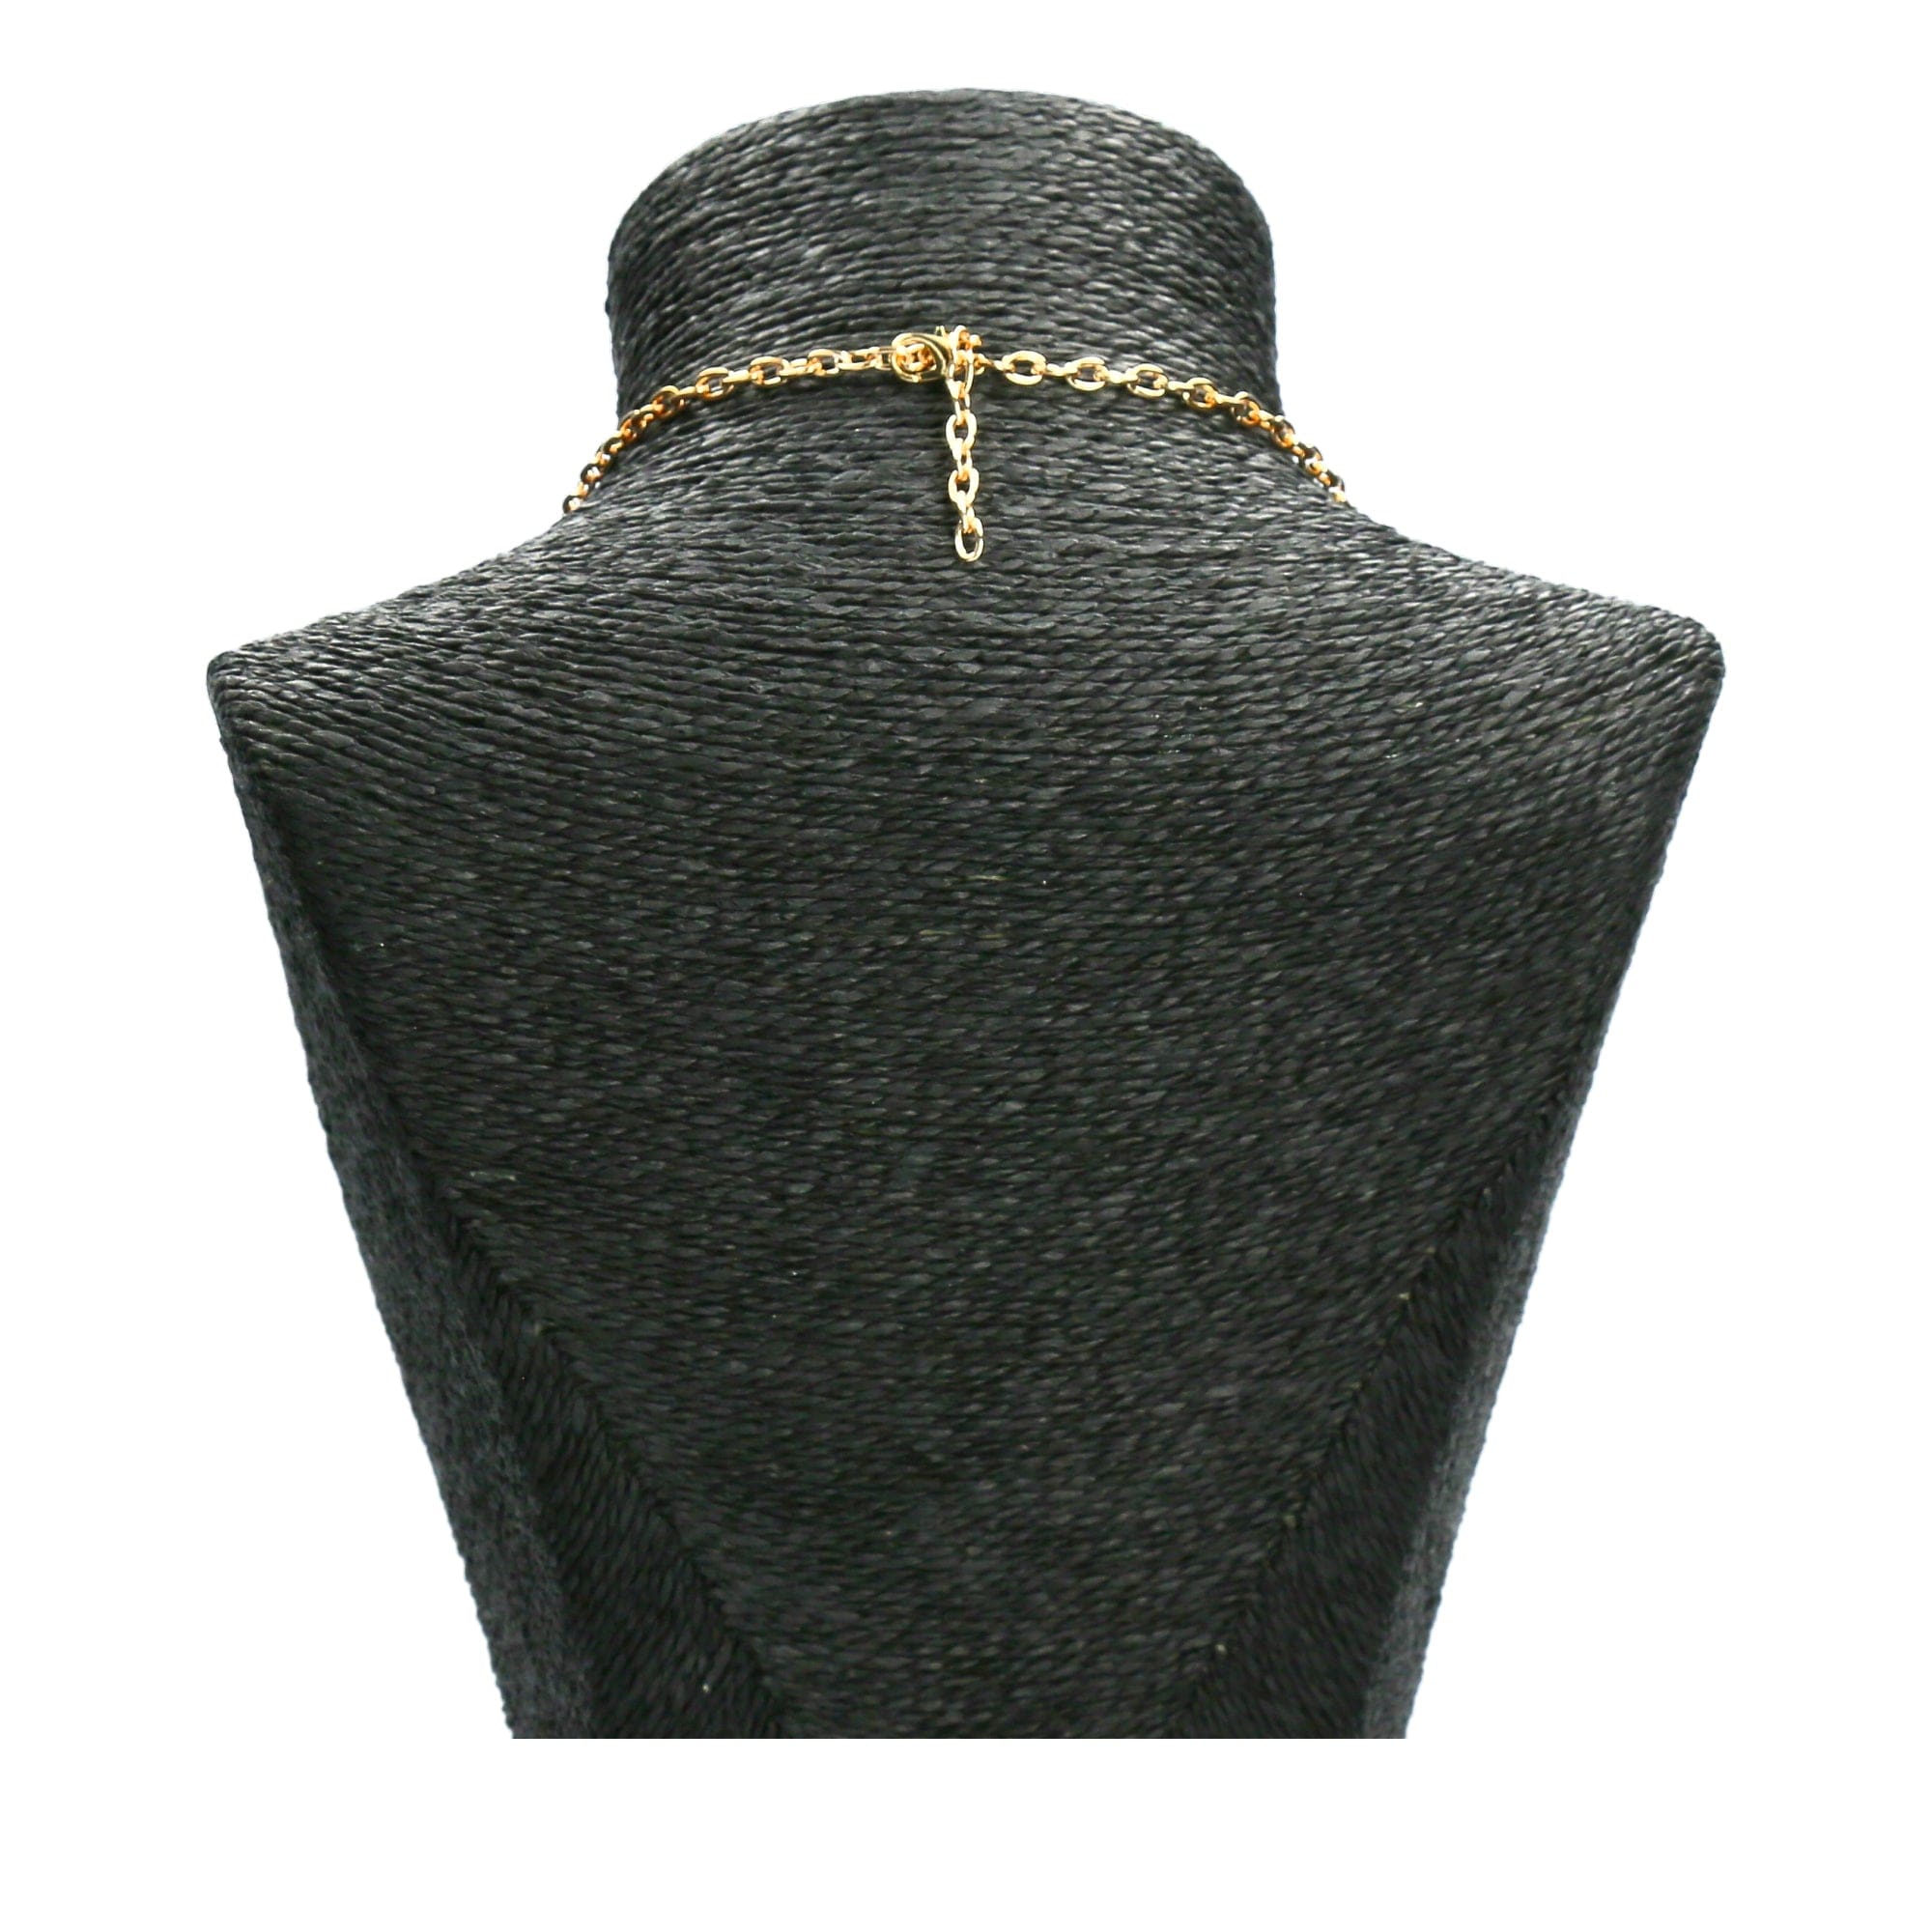 Perla jewelry set - Necklace